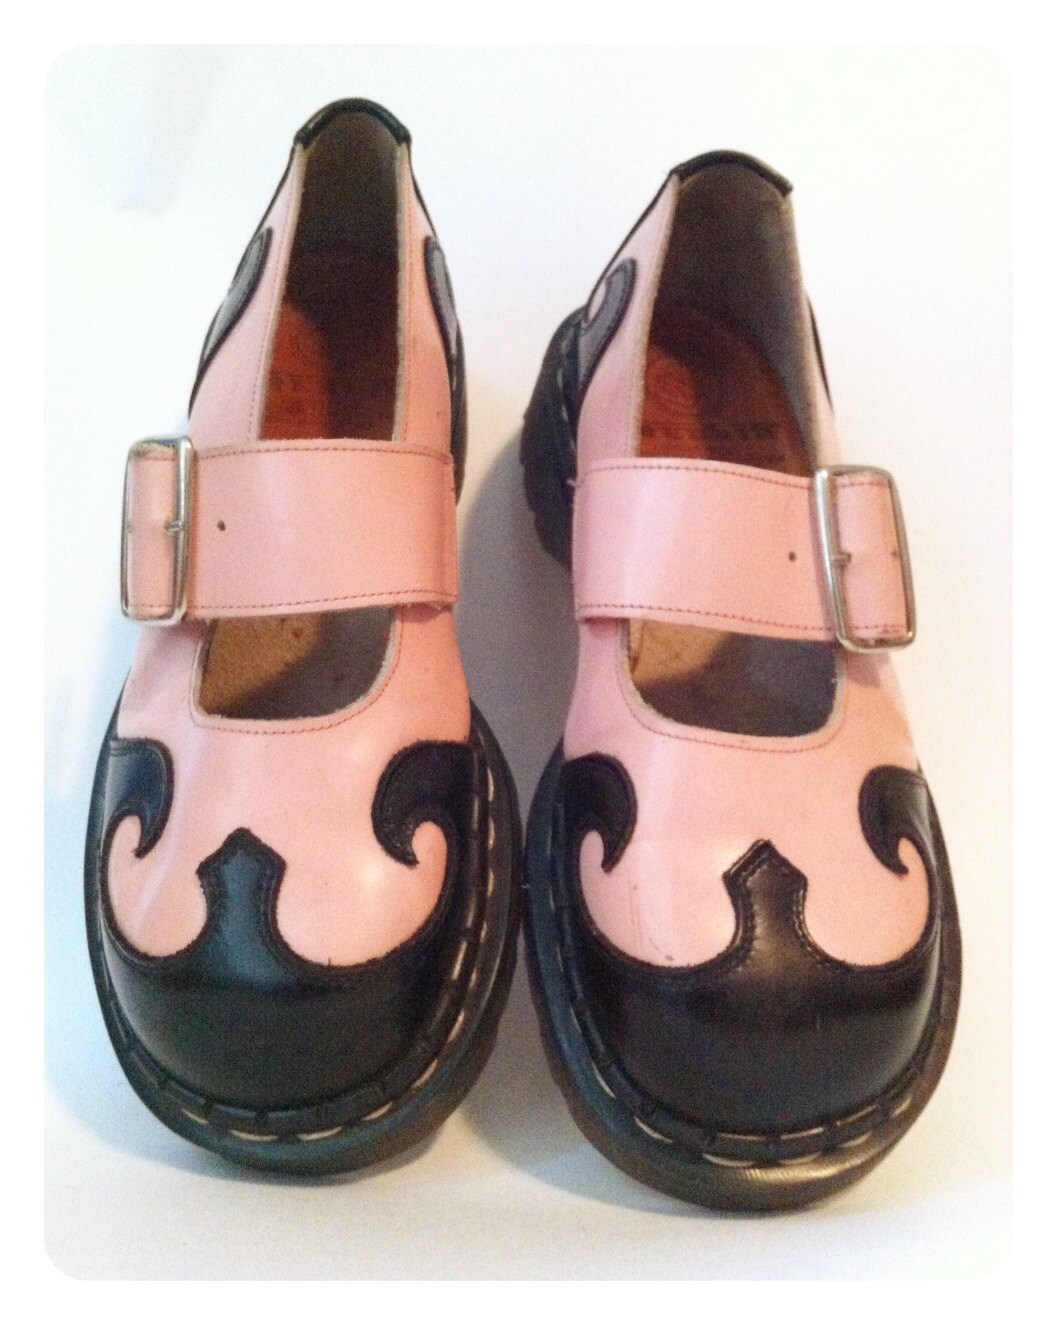 Vintage Tredair Rockabilly leather shoes Women's size 7.